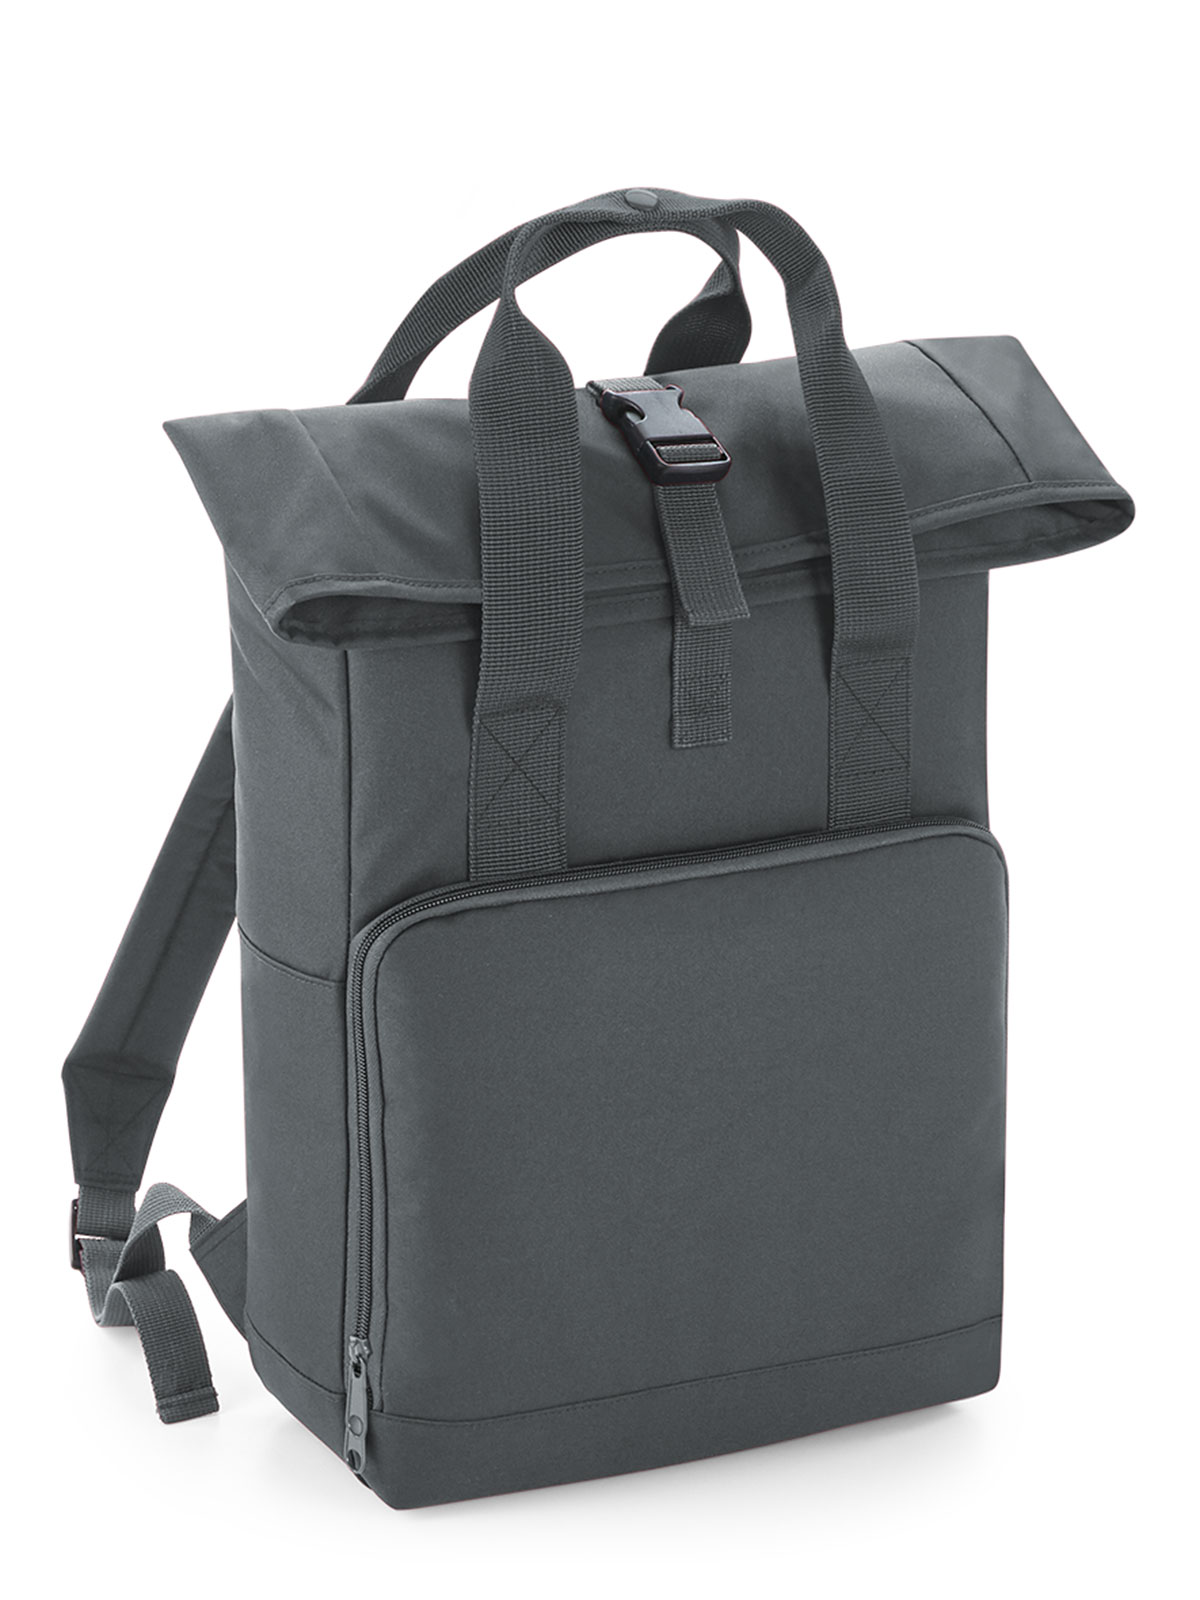 twin-handle-roll-top-backpack-graphite-grey.webp